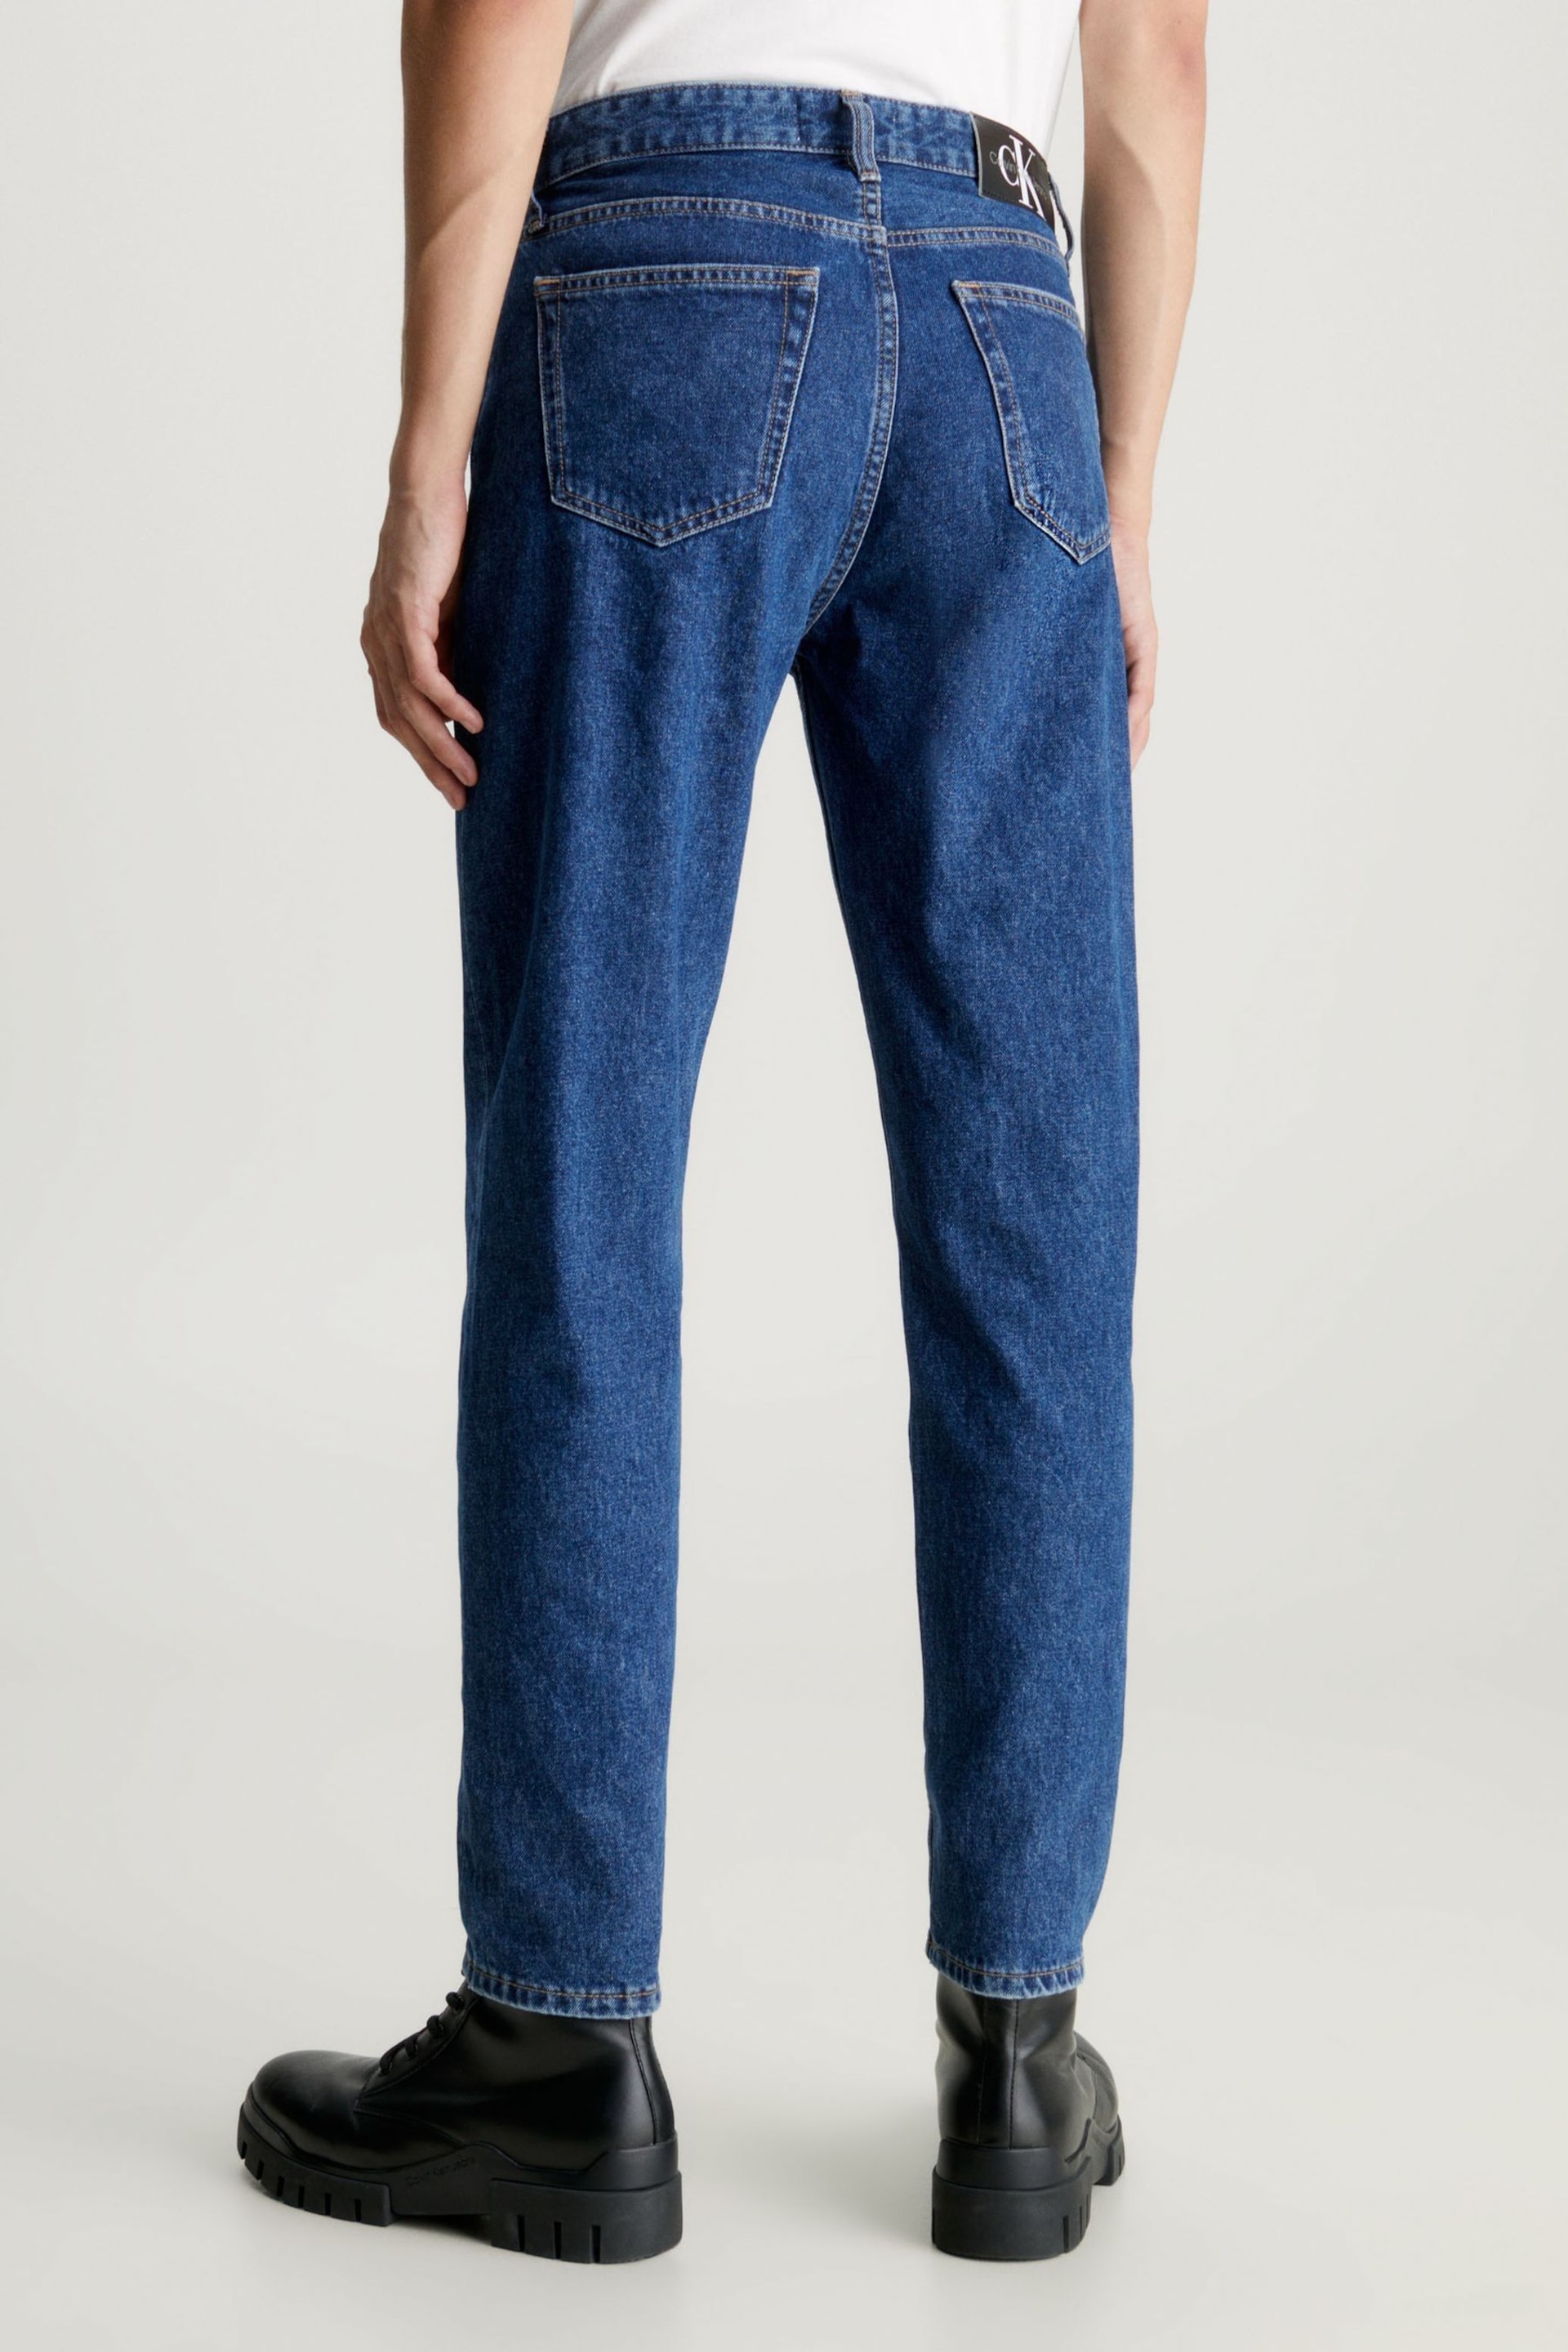 Calvin Klein Jeans Blue Regular Taper Jeans - Image 2 of 5